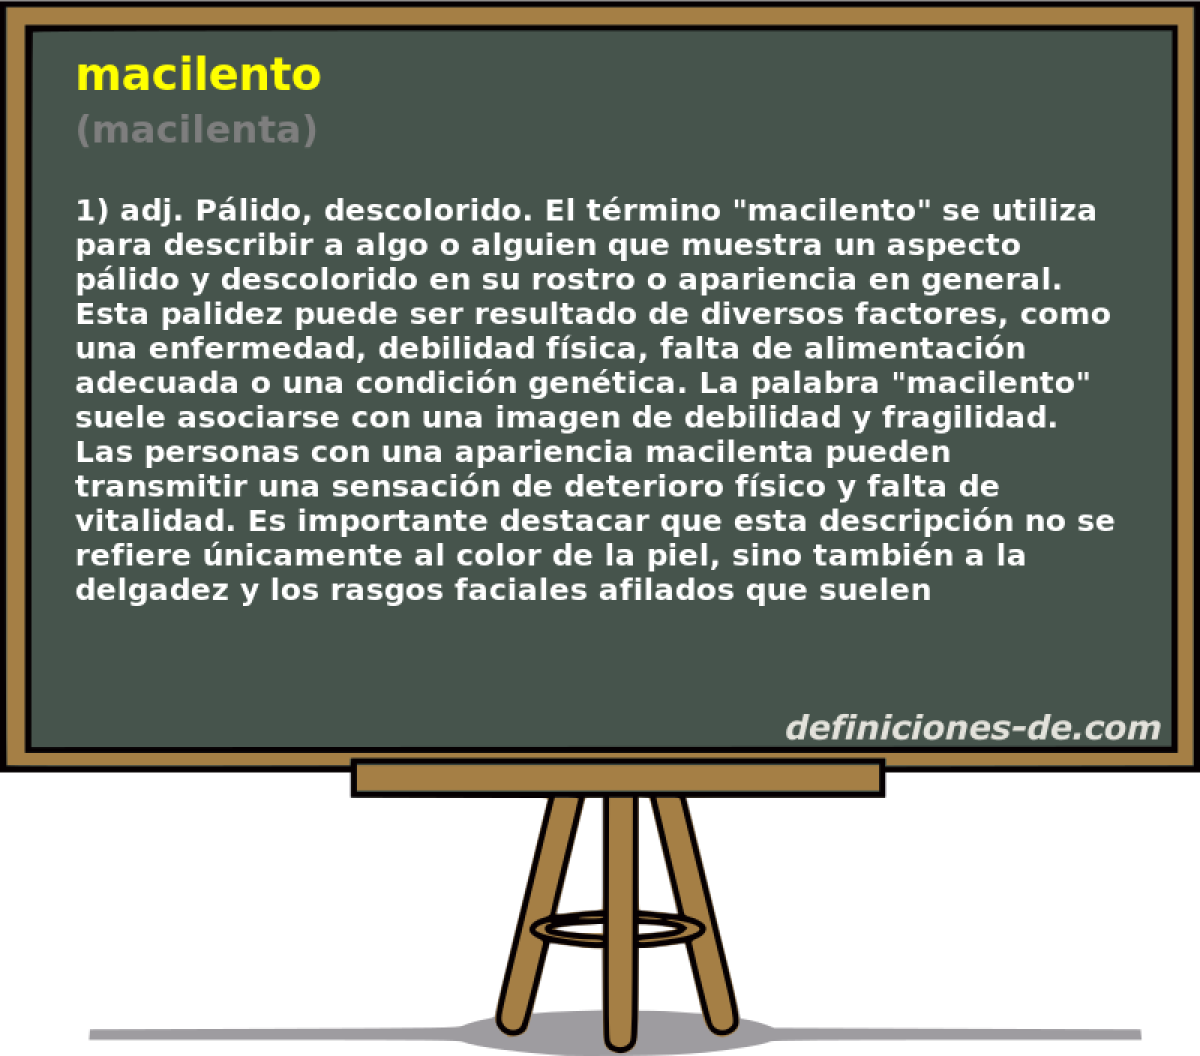 macilento (macilenta)